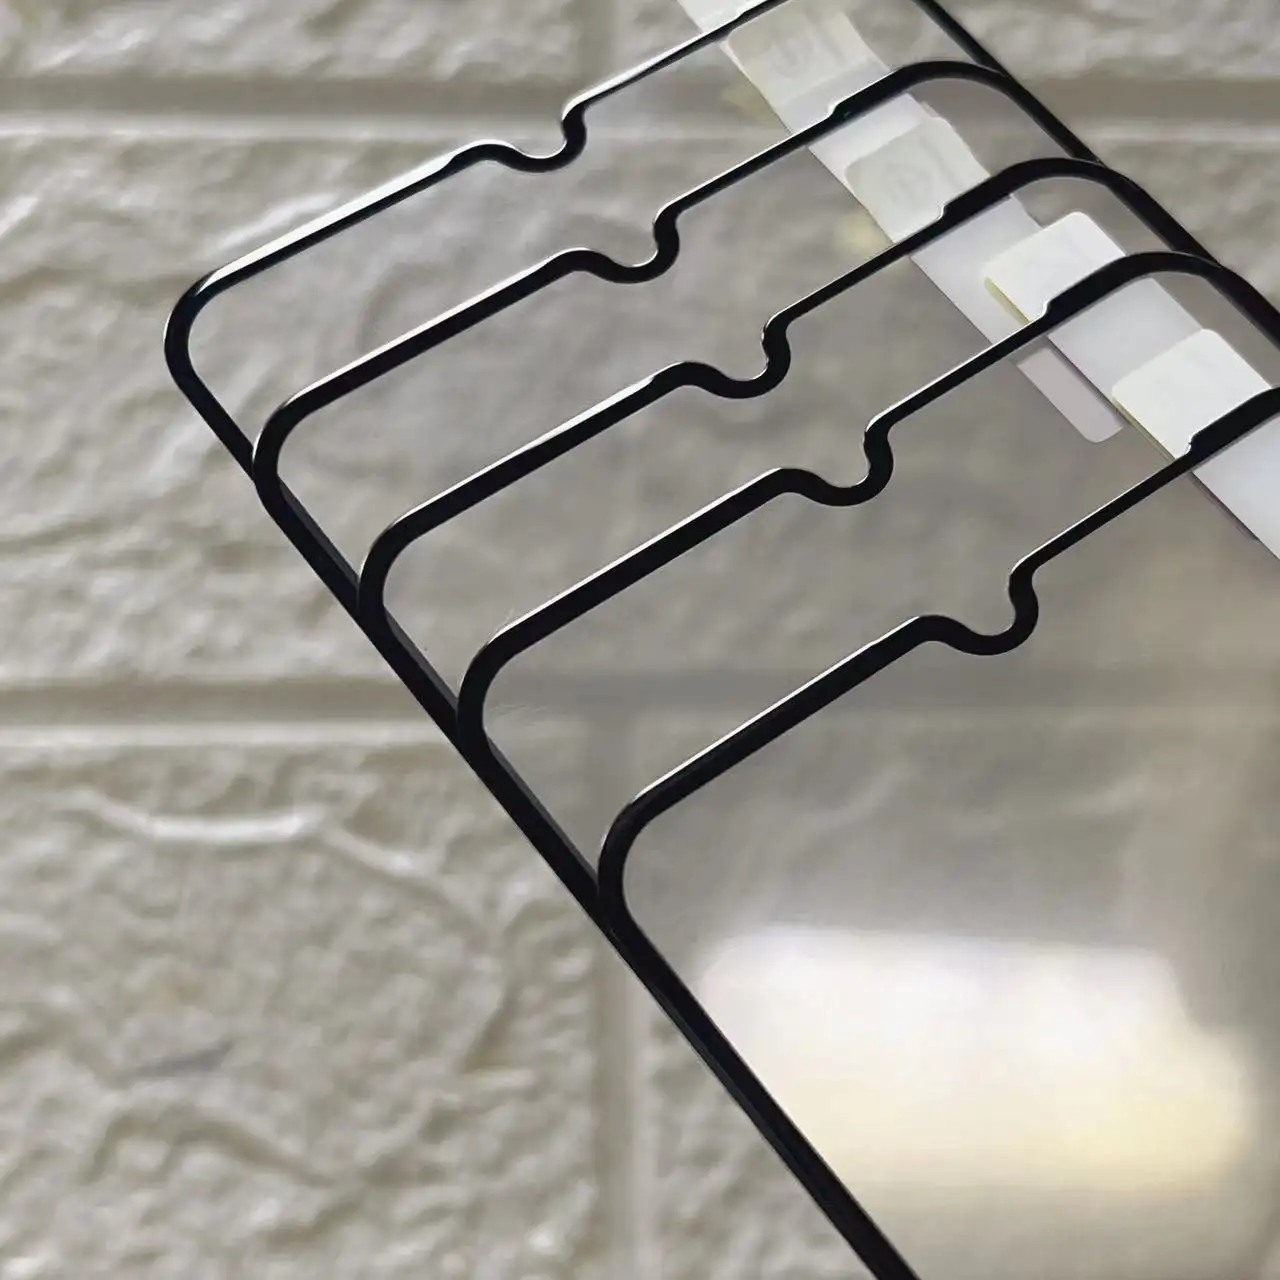 Leyi جديد المنتج الصلب 3D عالية الألومنيوم الزجاج شاشة حماية الهاتف الزجاج المقسى فيلم ل iphone1113 14 برو ماكس واقي للشاشة